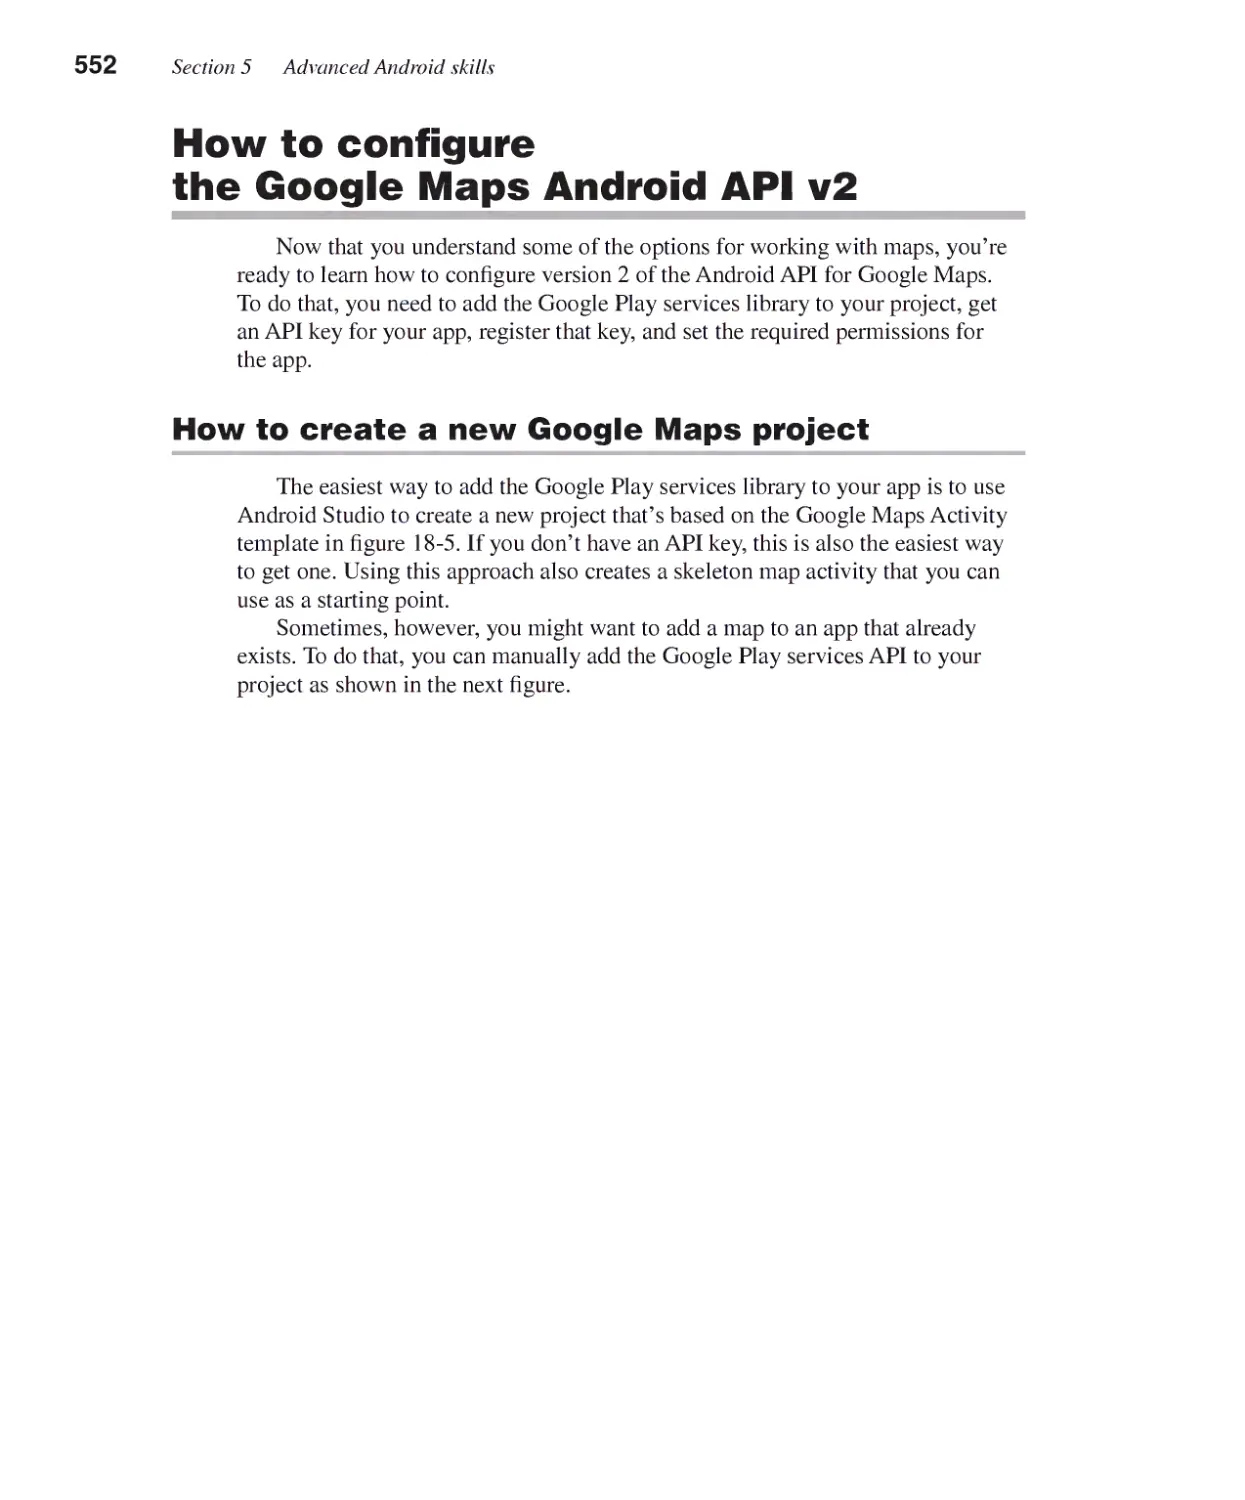 How to Configure the Google Maps Android API v2